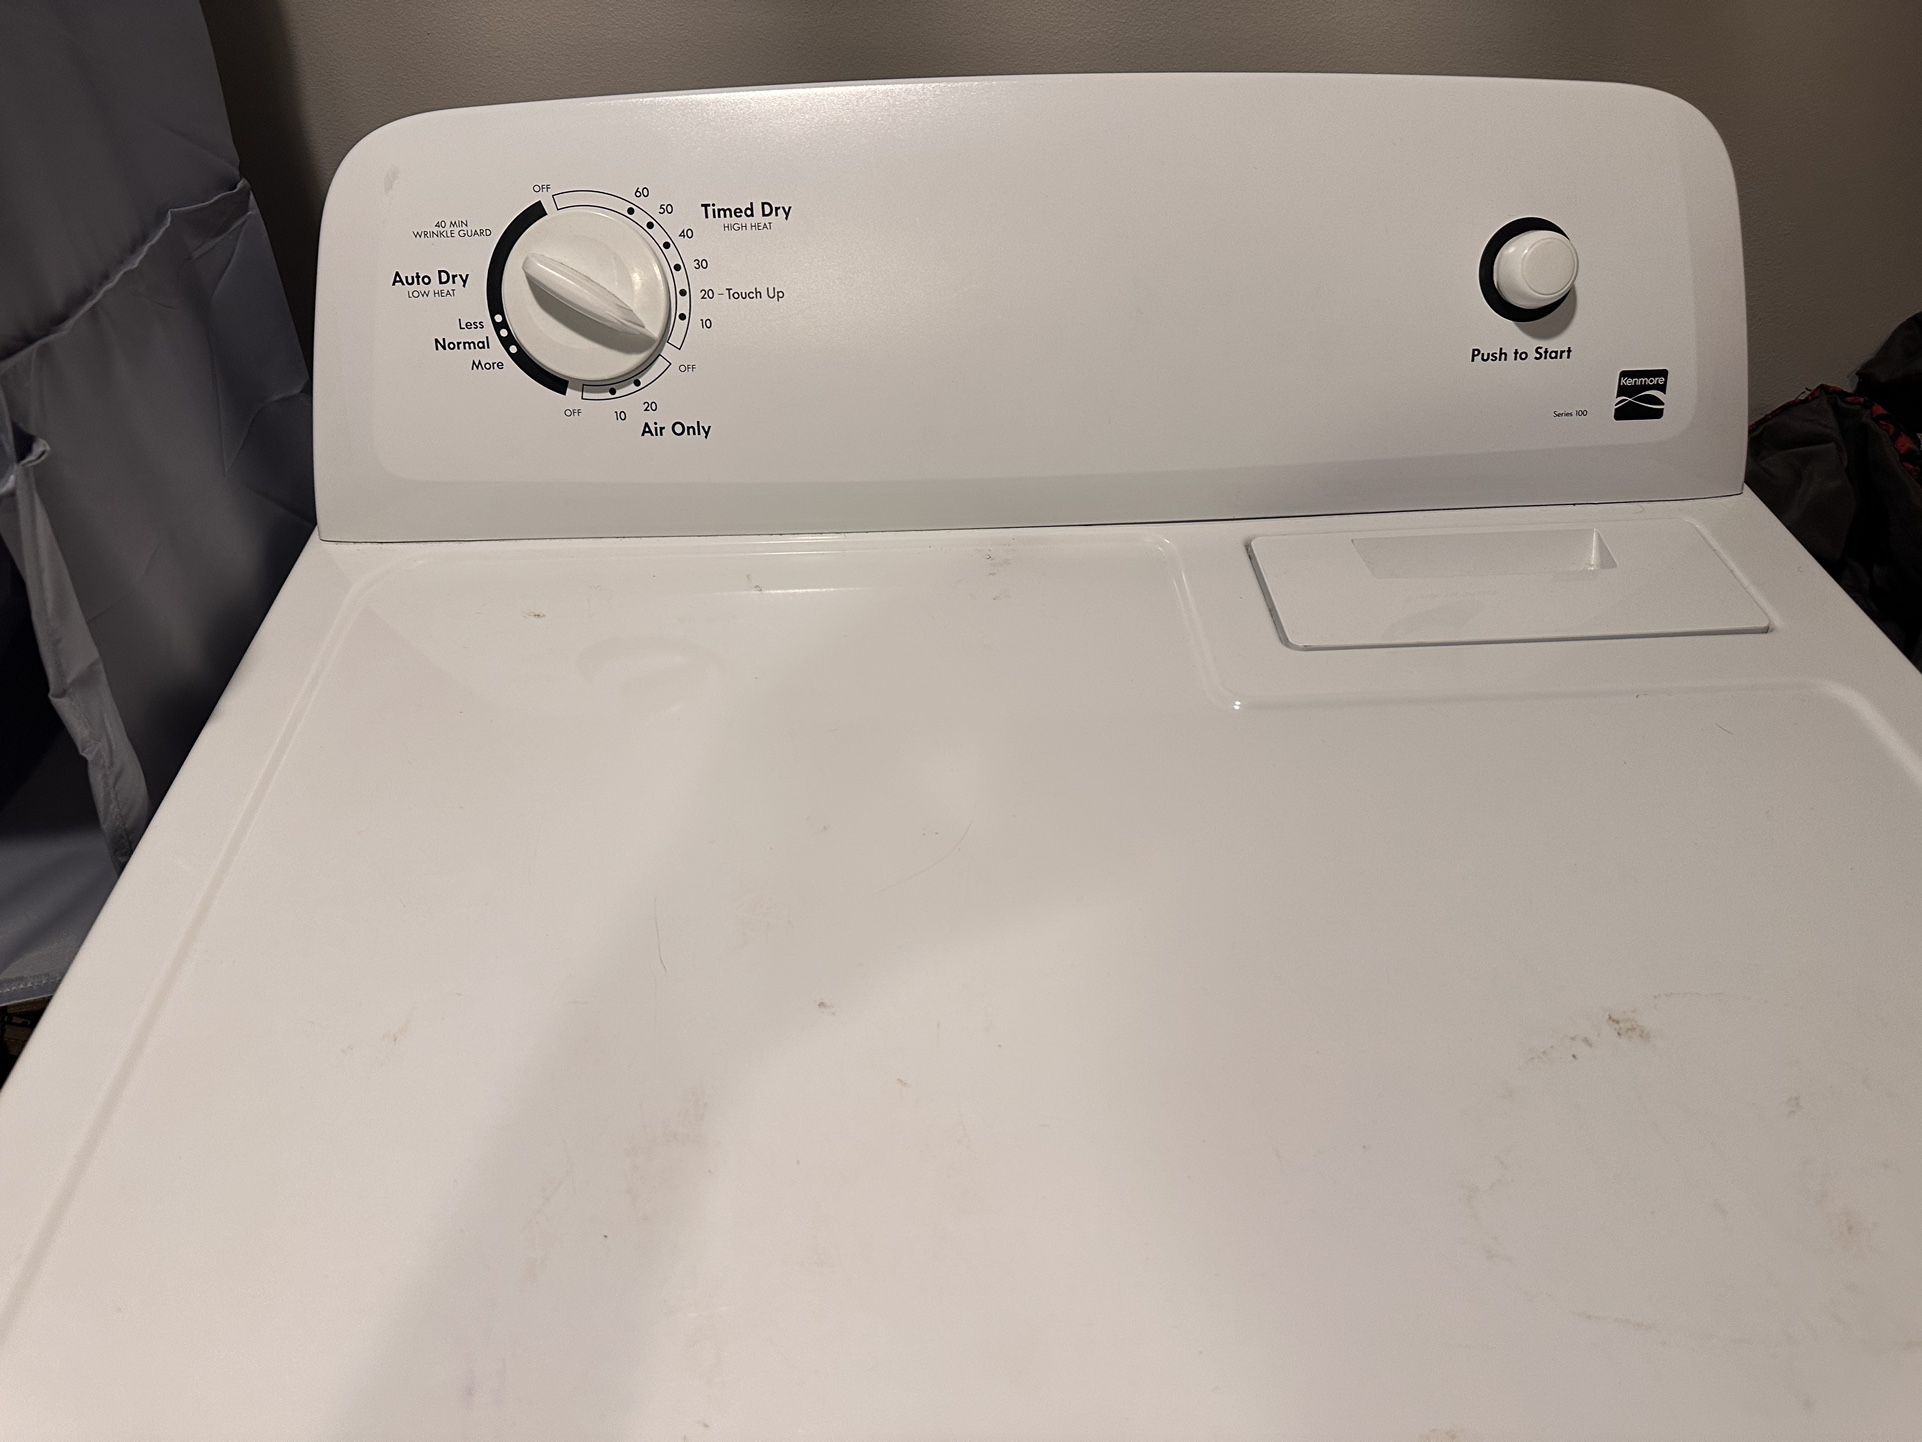 Kenmore 100 Series Dryer - Never Used